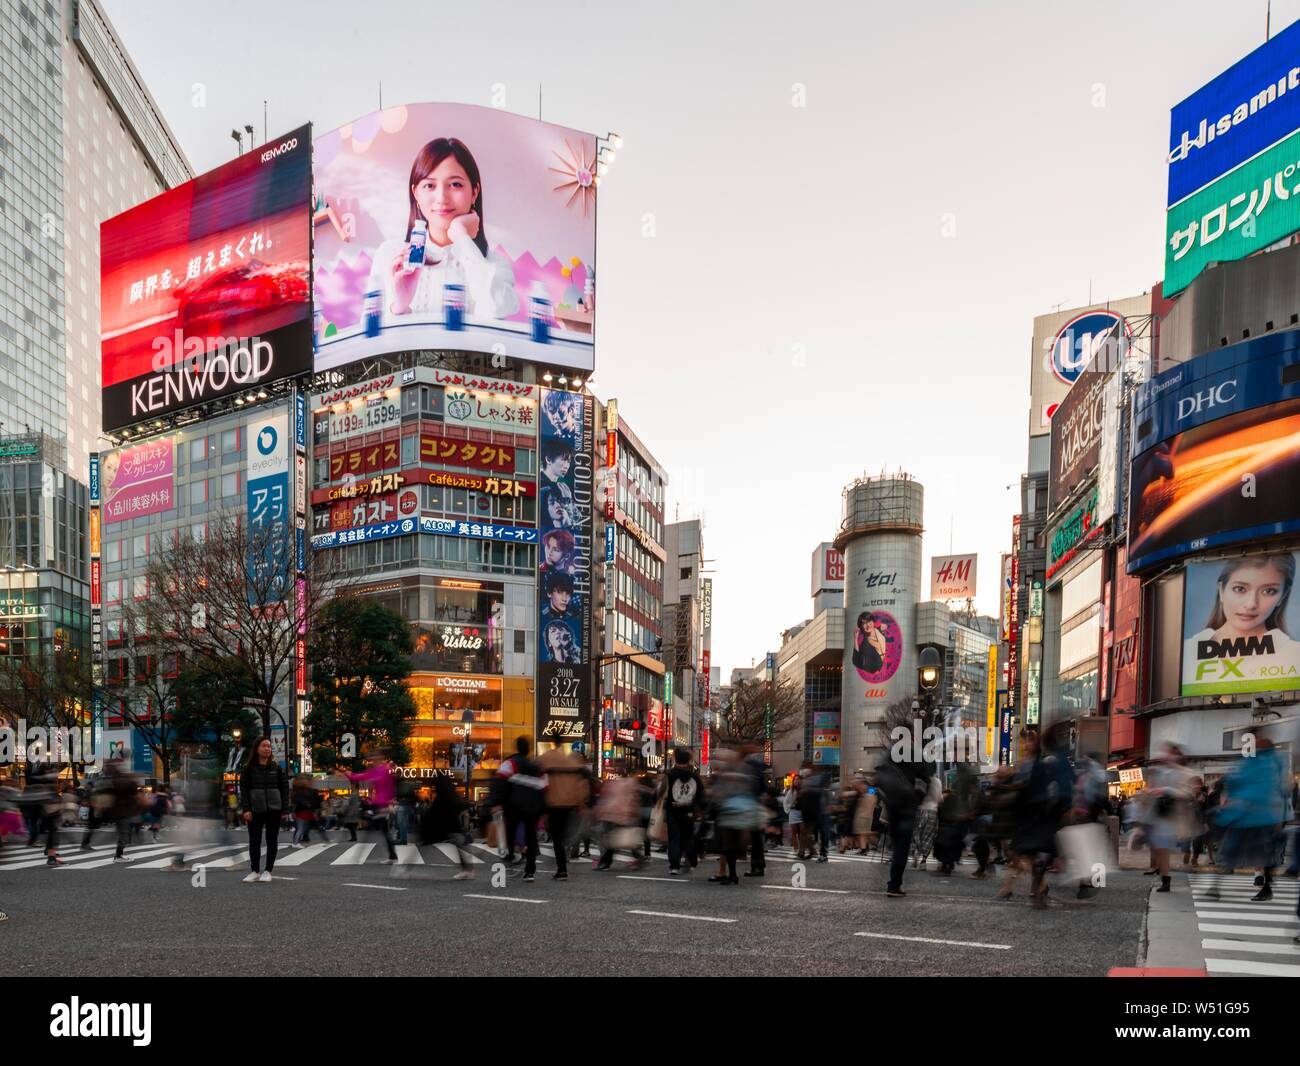 Shibuya Crossing, crossing with many pedestrians, many shopping centers and shops, illuminated advertising on skyscrapers, Shibuya, Tokyo, Japan Stock Photo